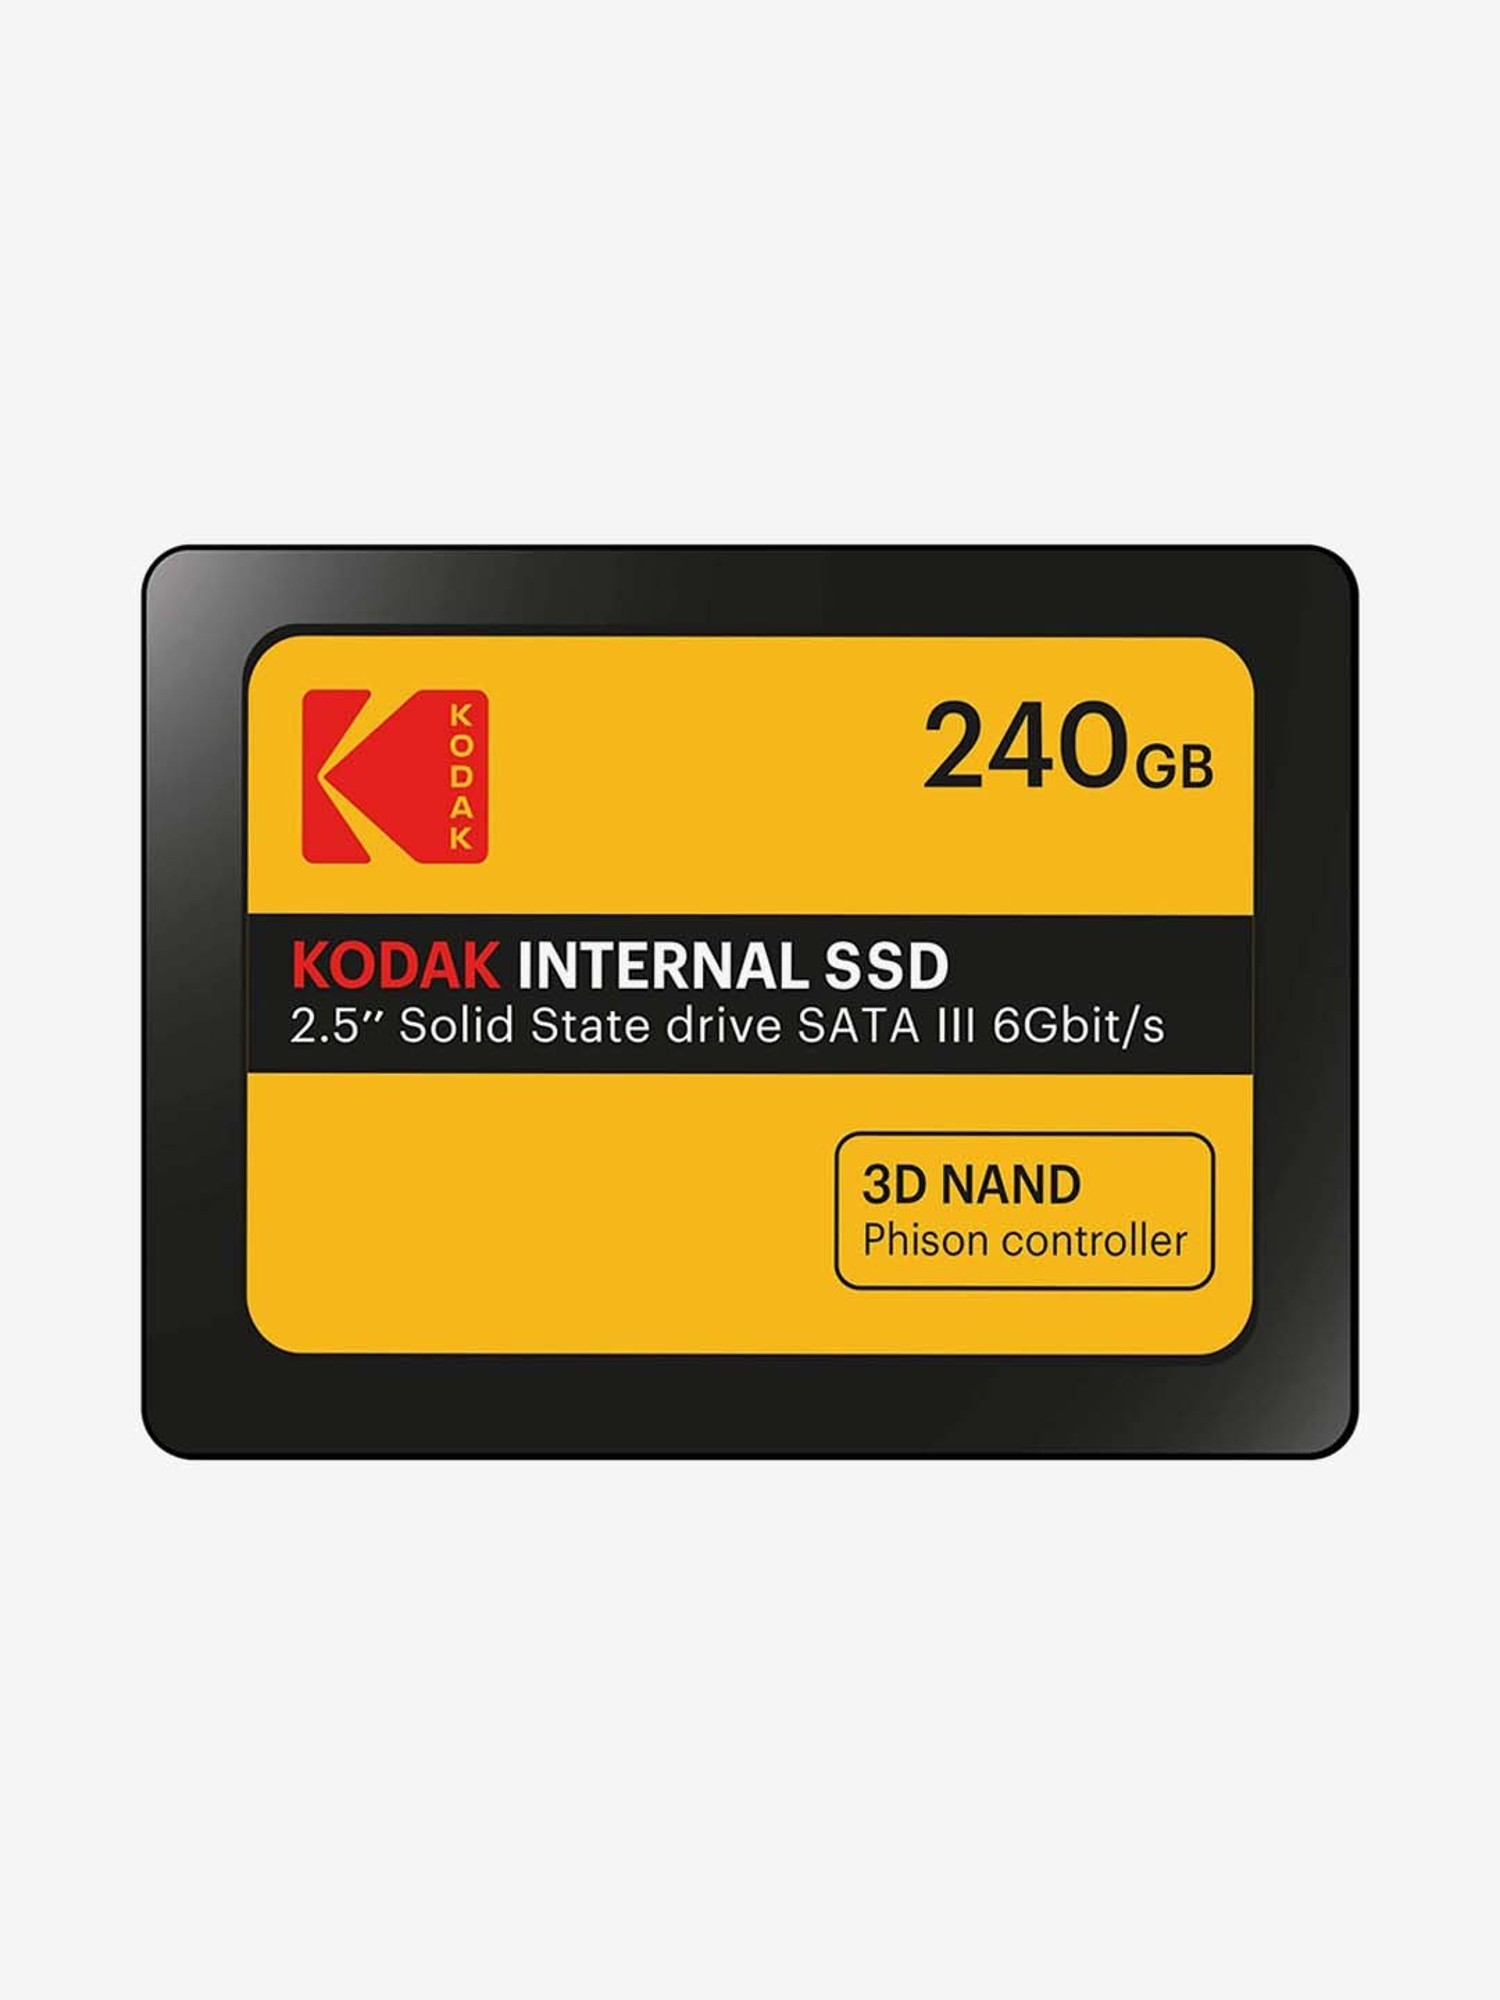 Buy Kodak EKSSD240GX150K 2.5 inches SATA III 6Gb/s 240GB SSD